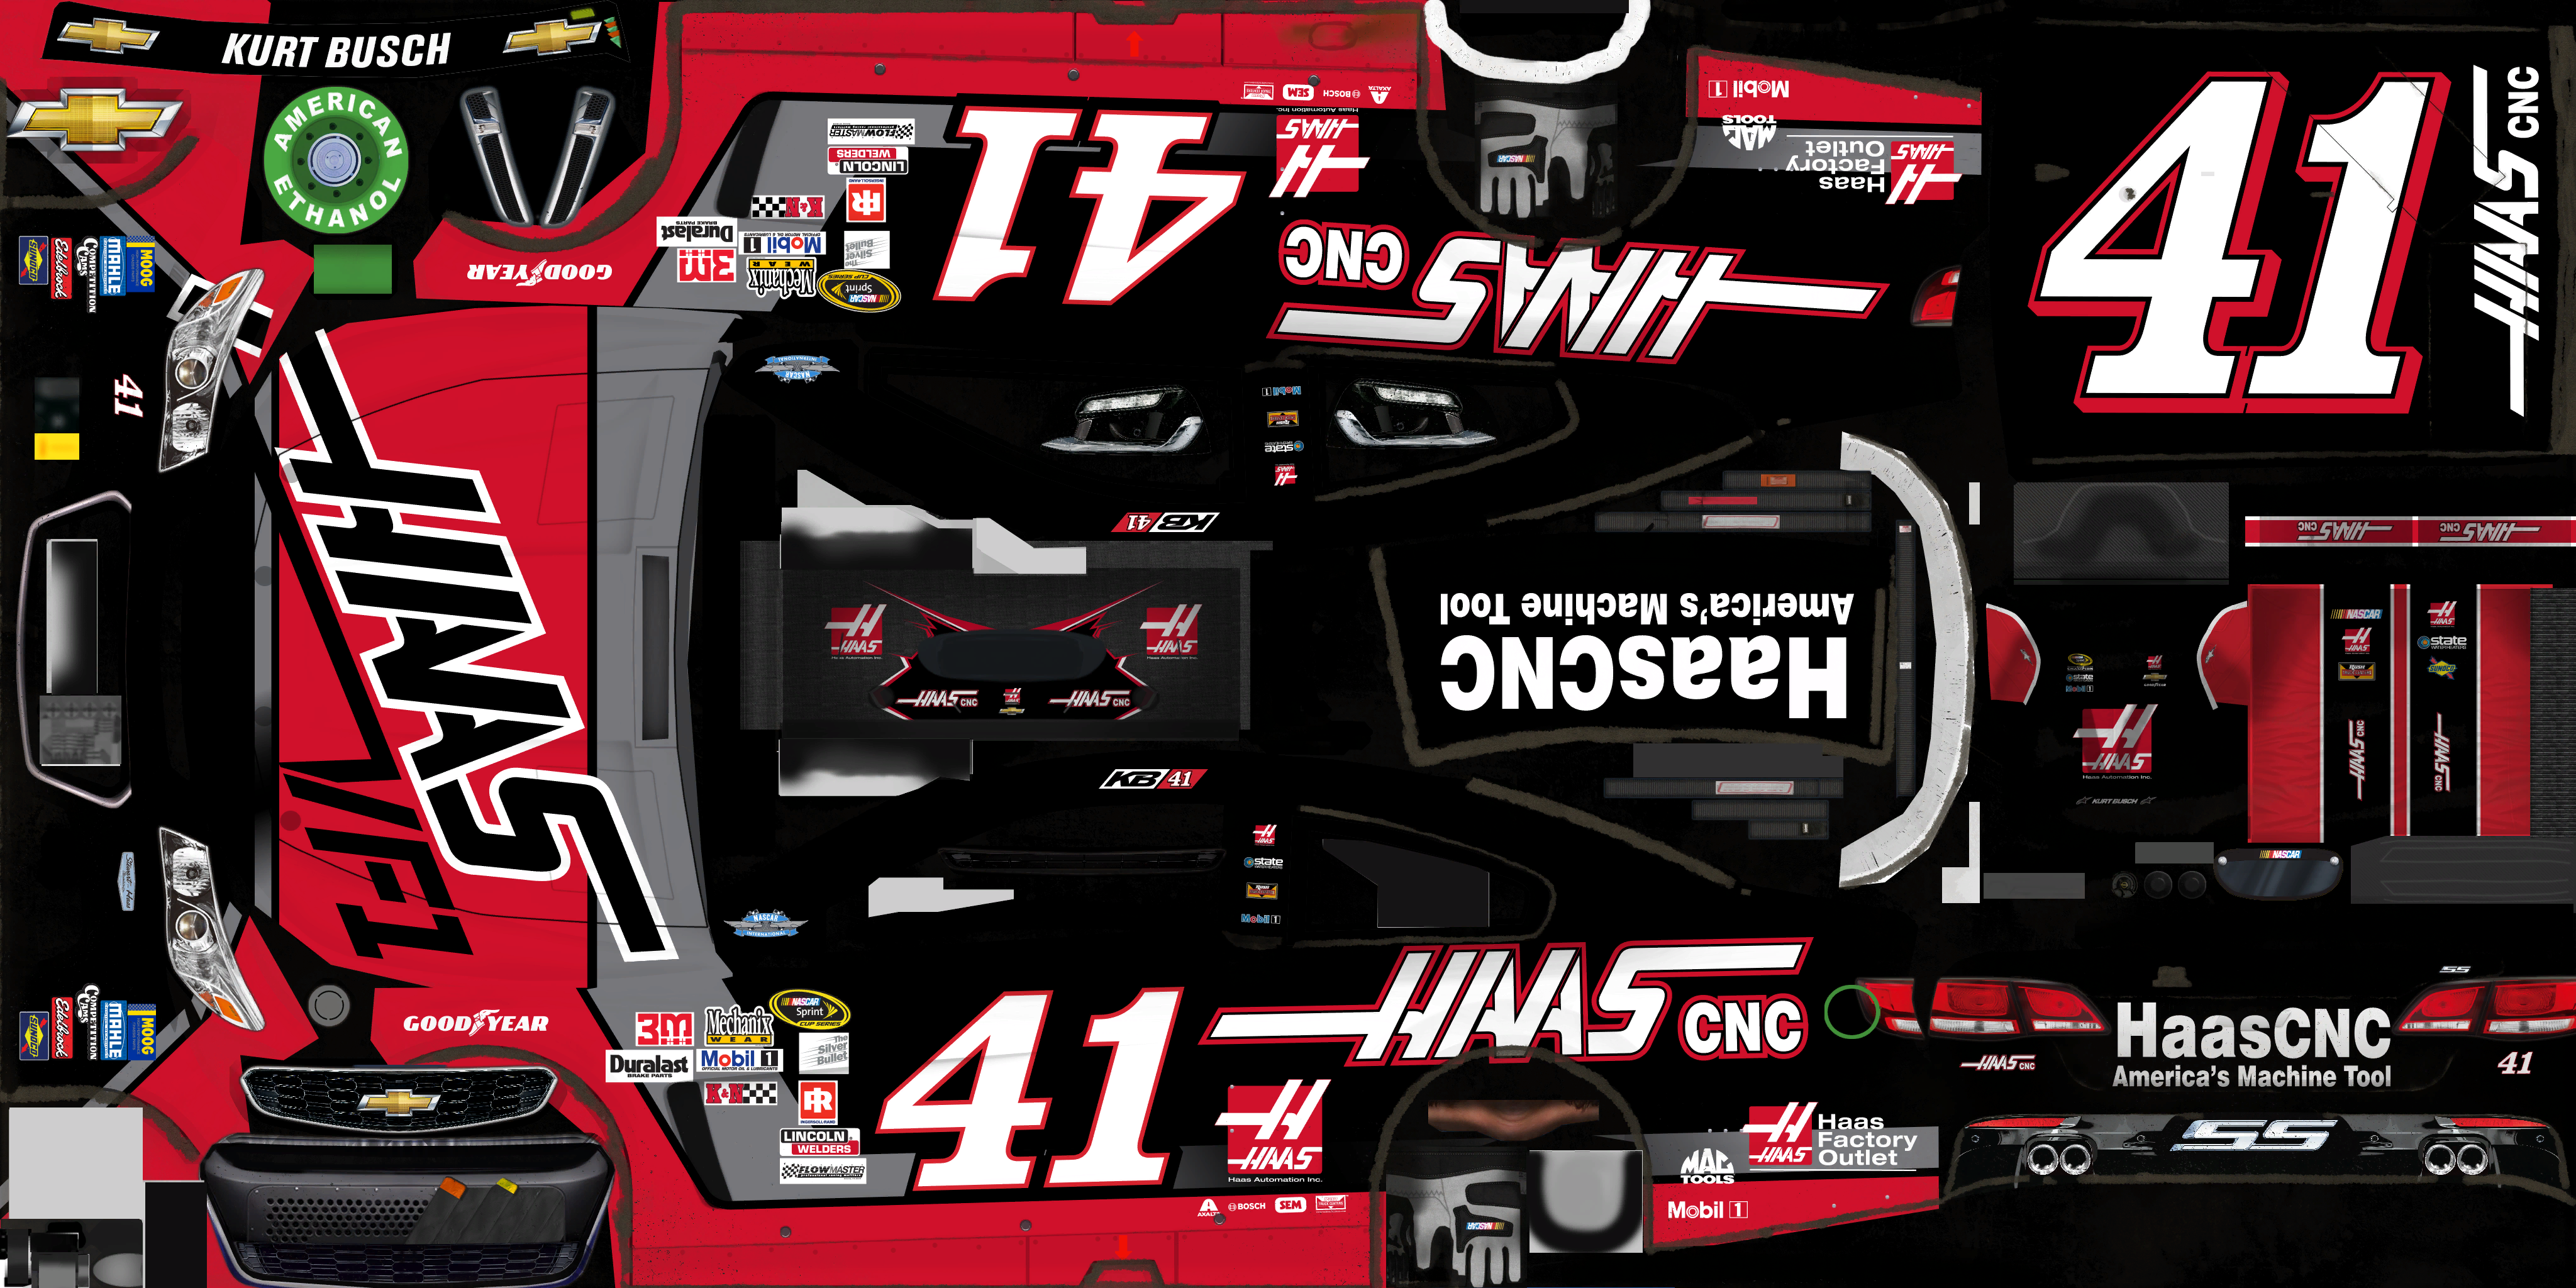 NASCAR Heat Evolution - #41 Kurt Busch (Haas VF1 Throwback)